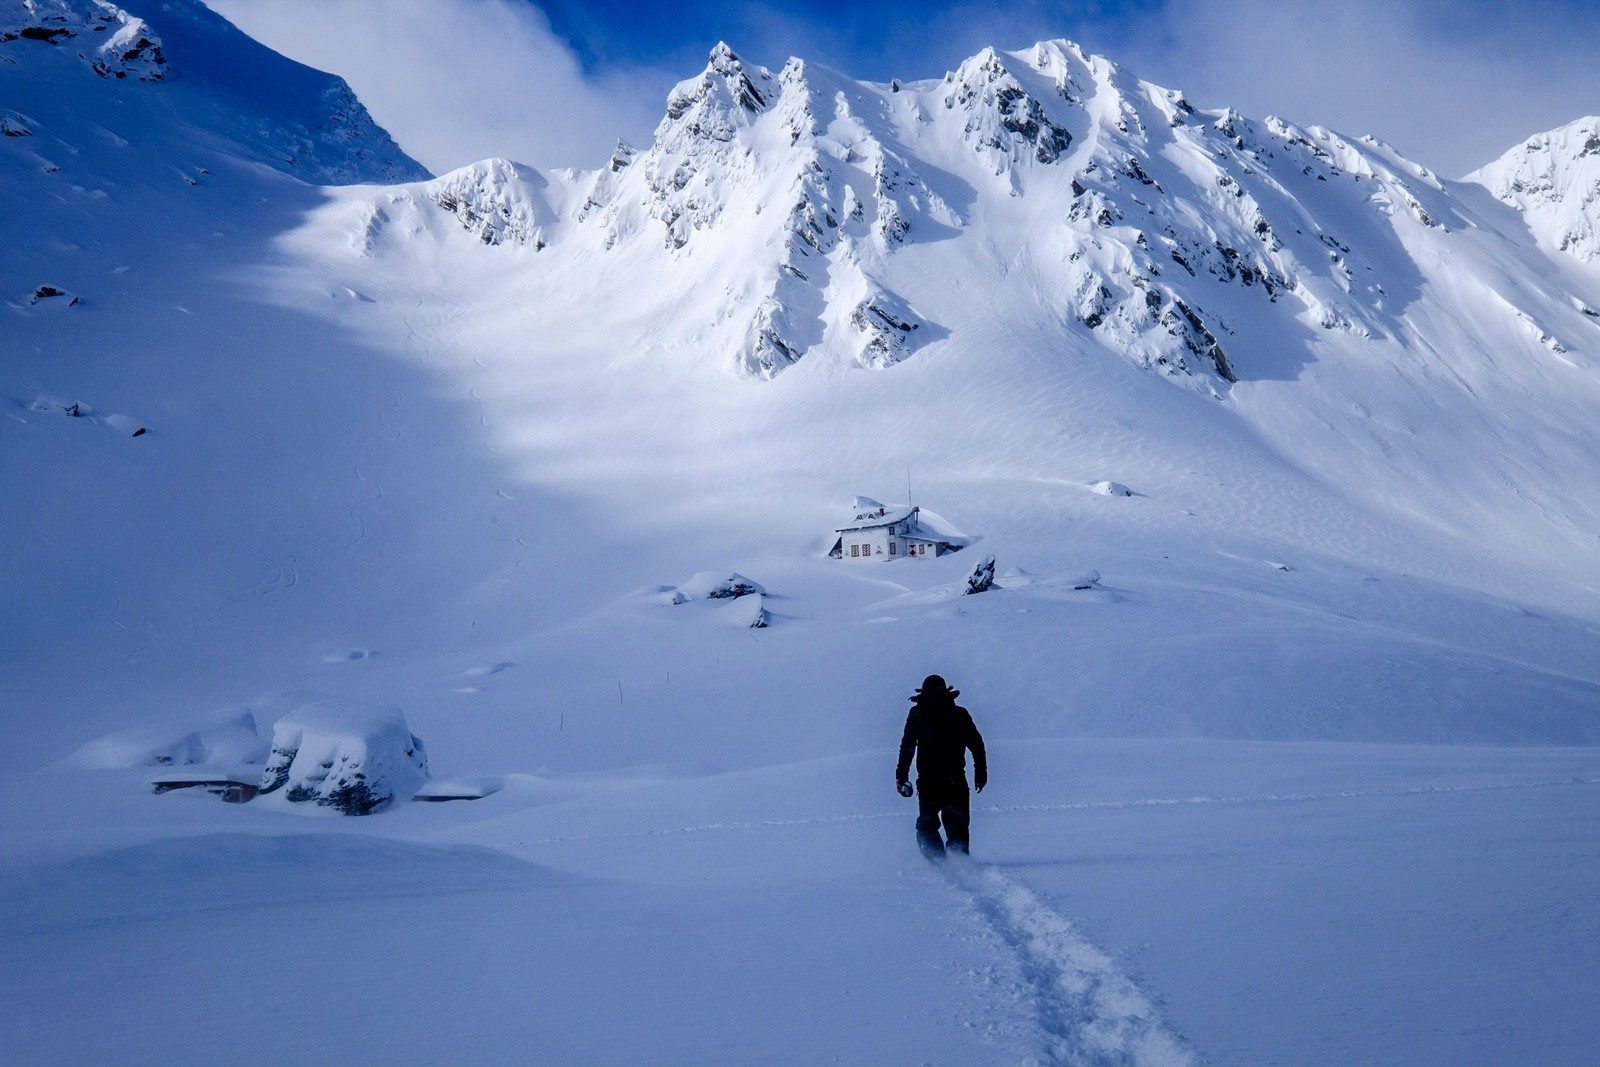 A hiker knee-deep in snow in Romania's Carpathian Mountains.